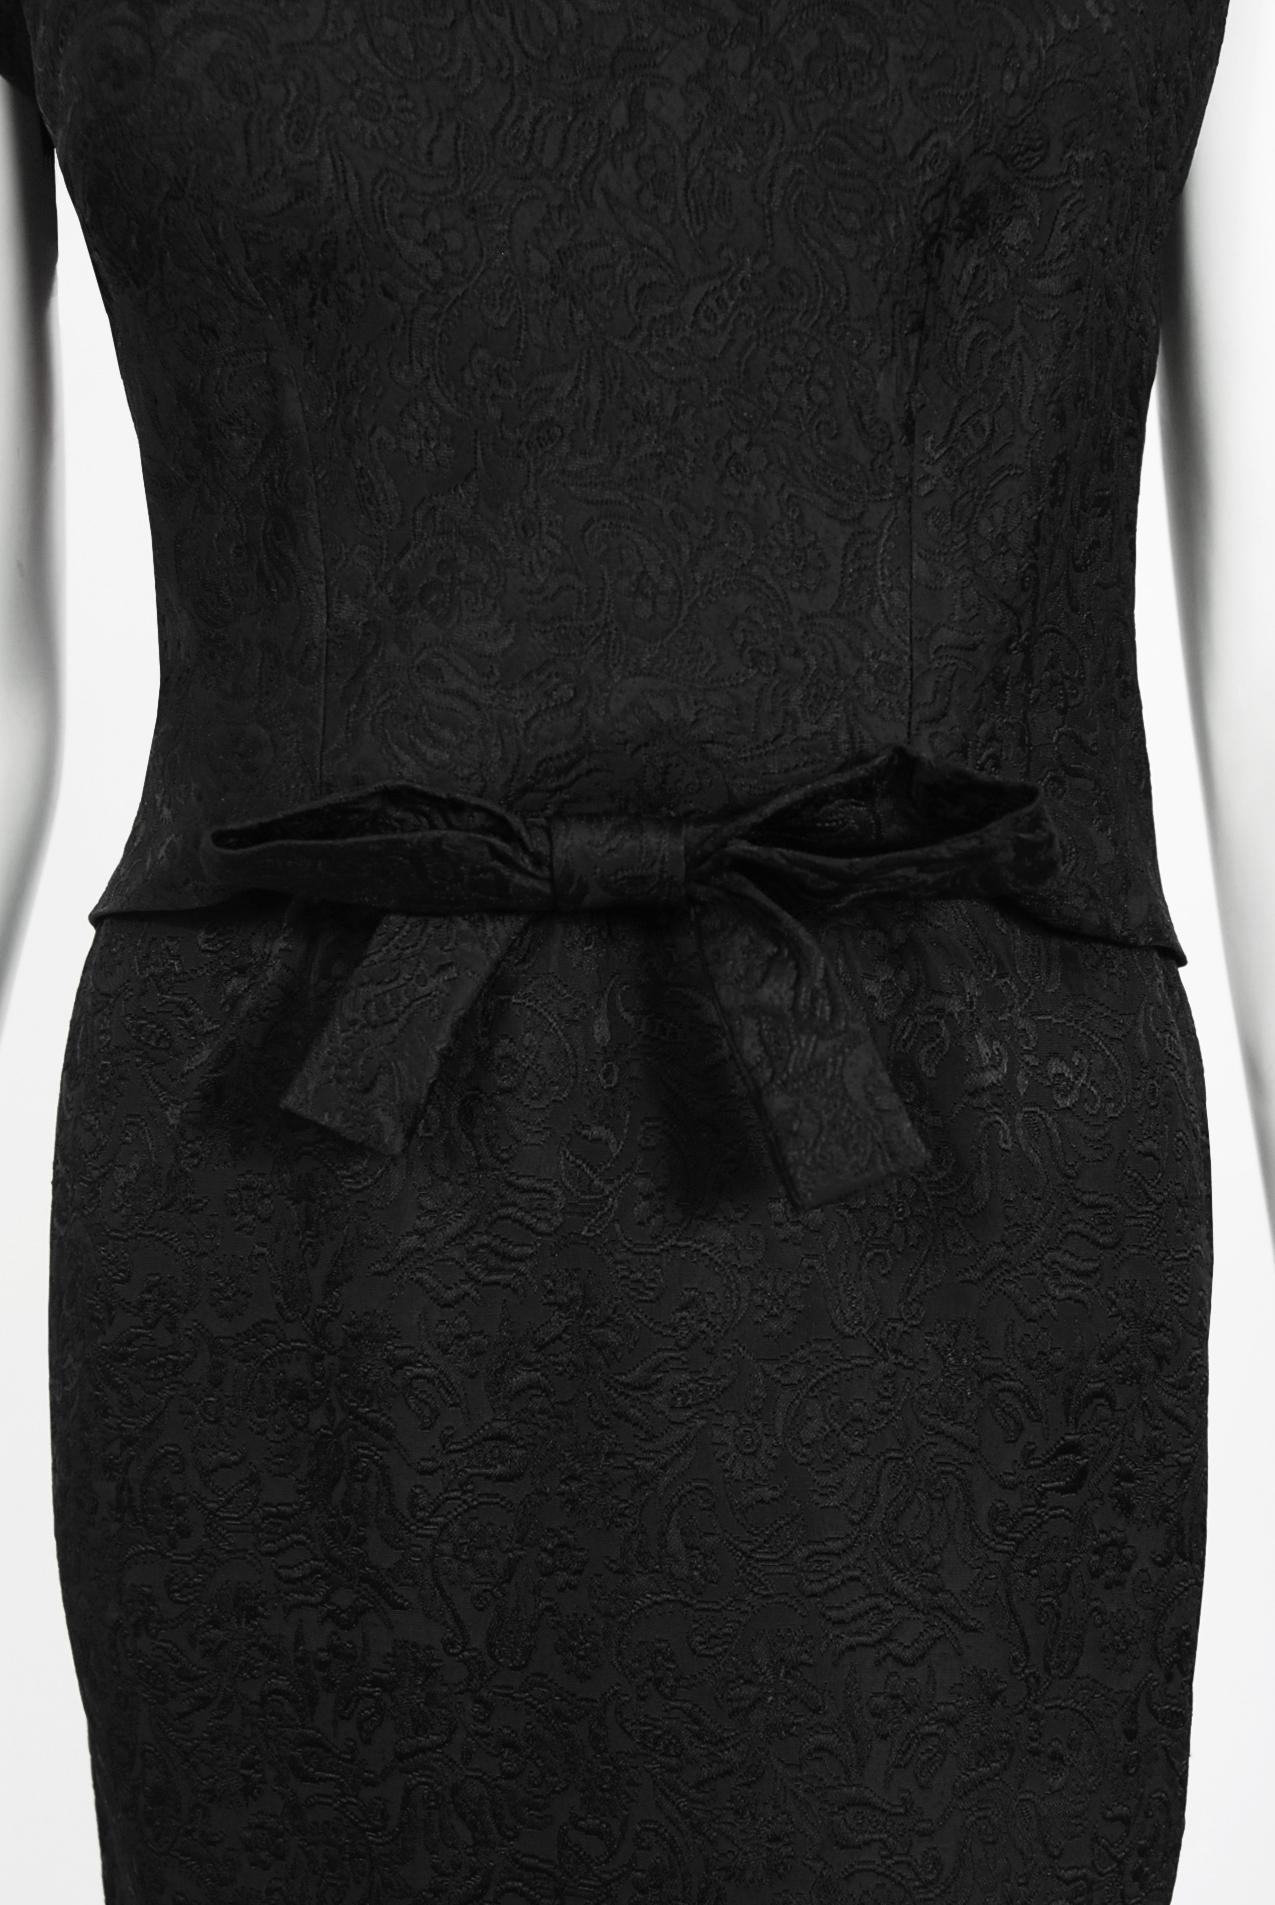 Noir Vintage 1961 Eisa Balenciaga Haute Couture Black Silk Sculpted Bow Cut-Out Dress